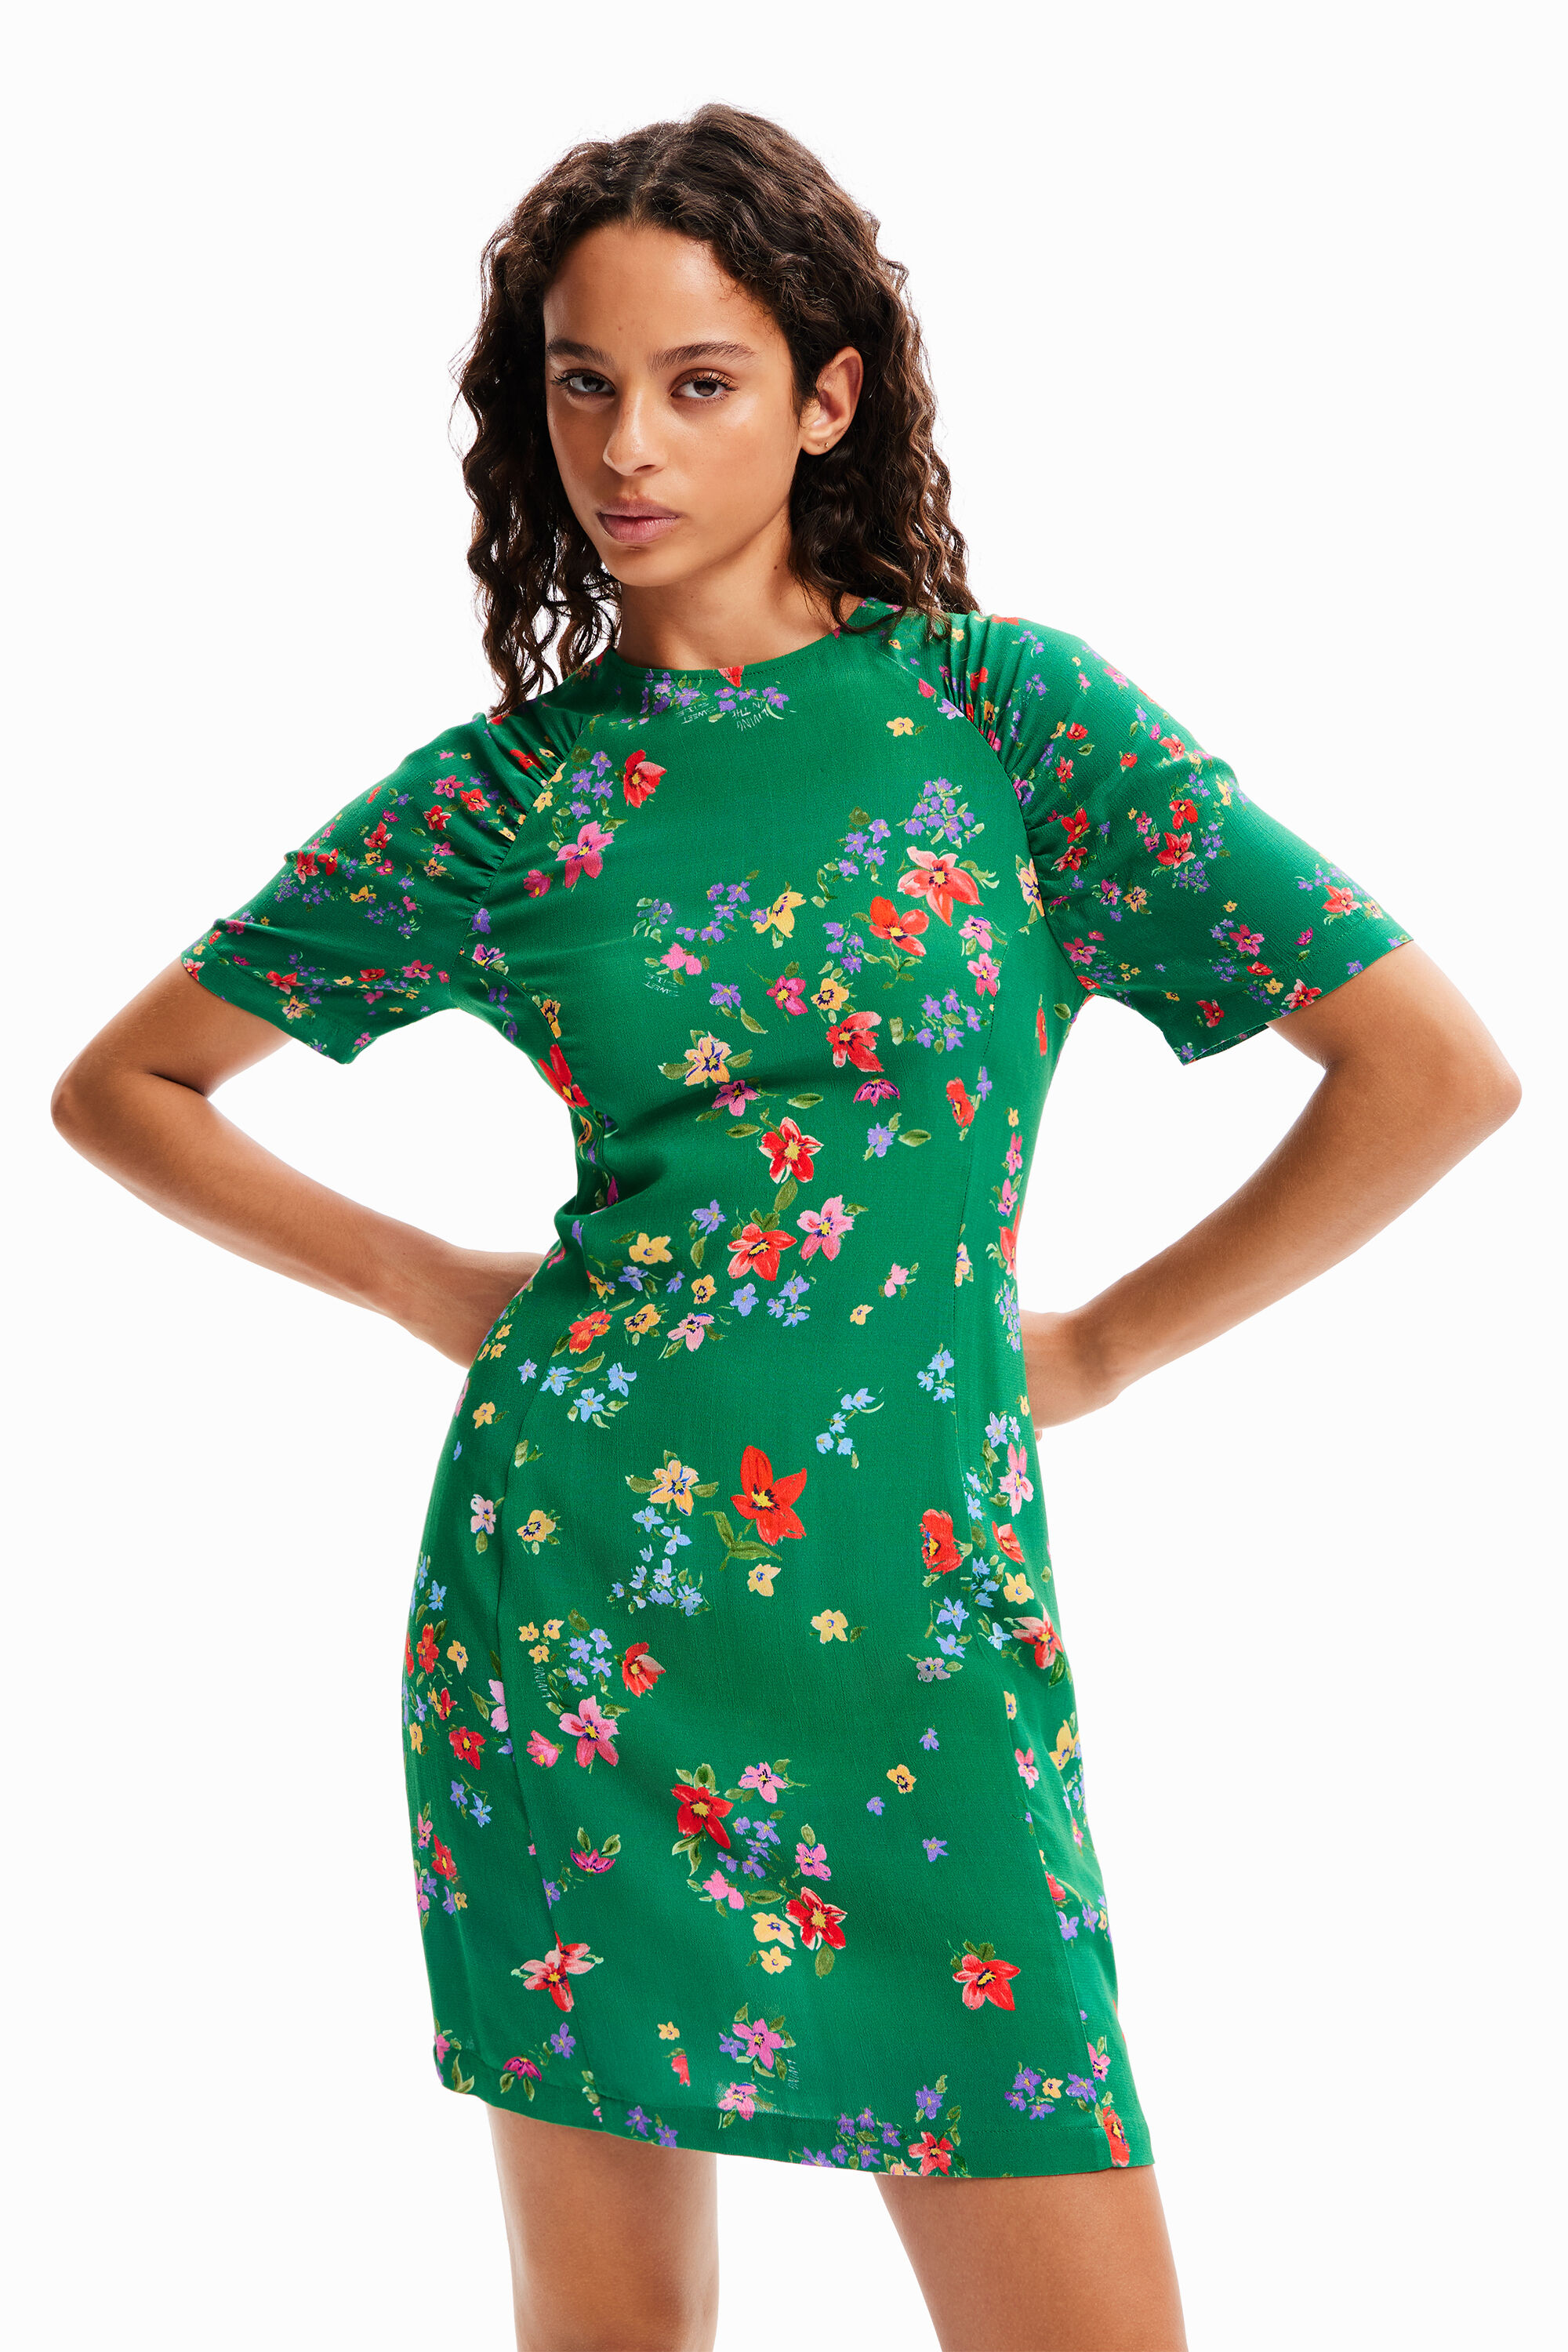 Desigual Short floral dress